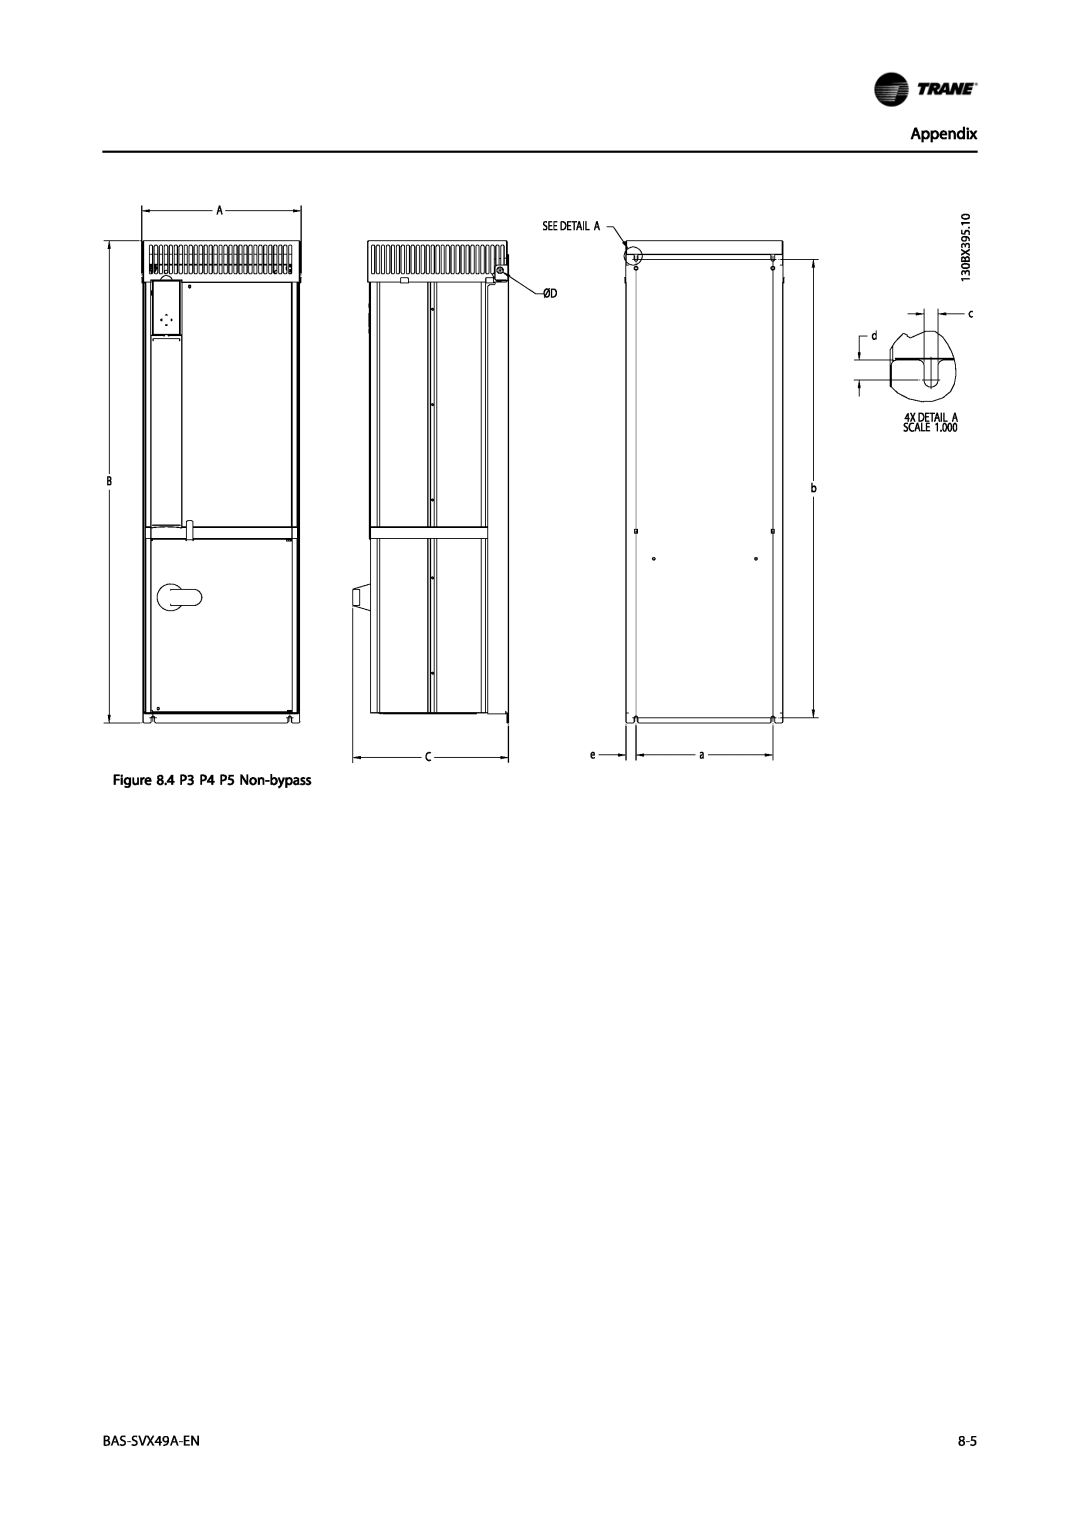 Trane Vertical Bypass/Non Bypass Panel, TR200 specifications Appendix, 4 P3 P4 P5 Non-bypass, BAS-SVX49A-EN 